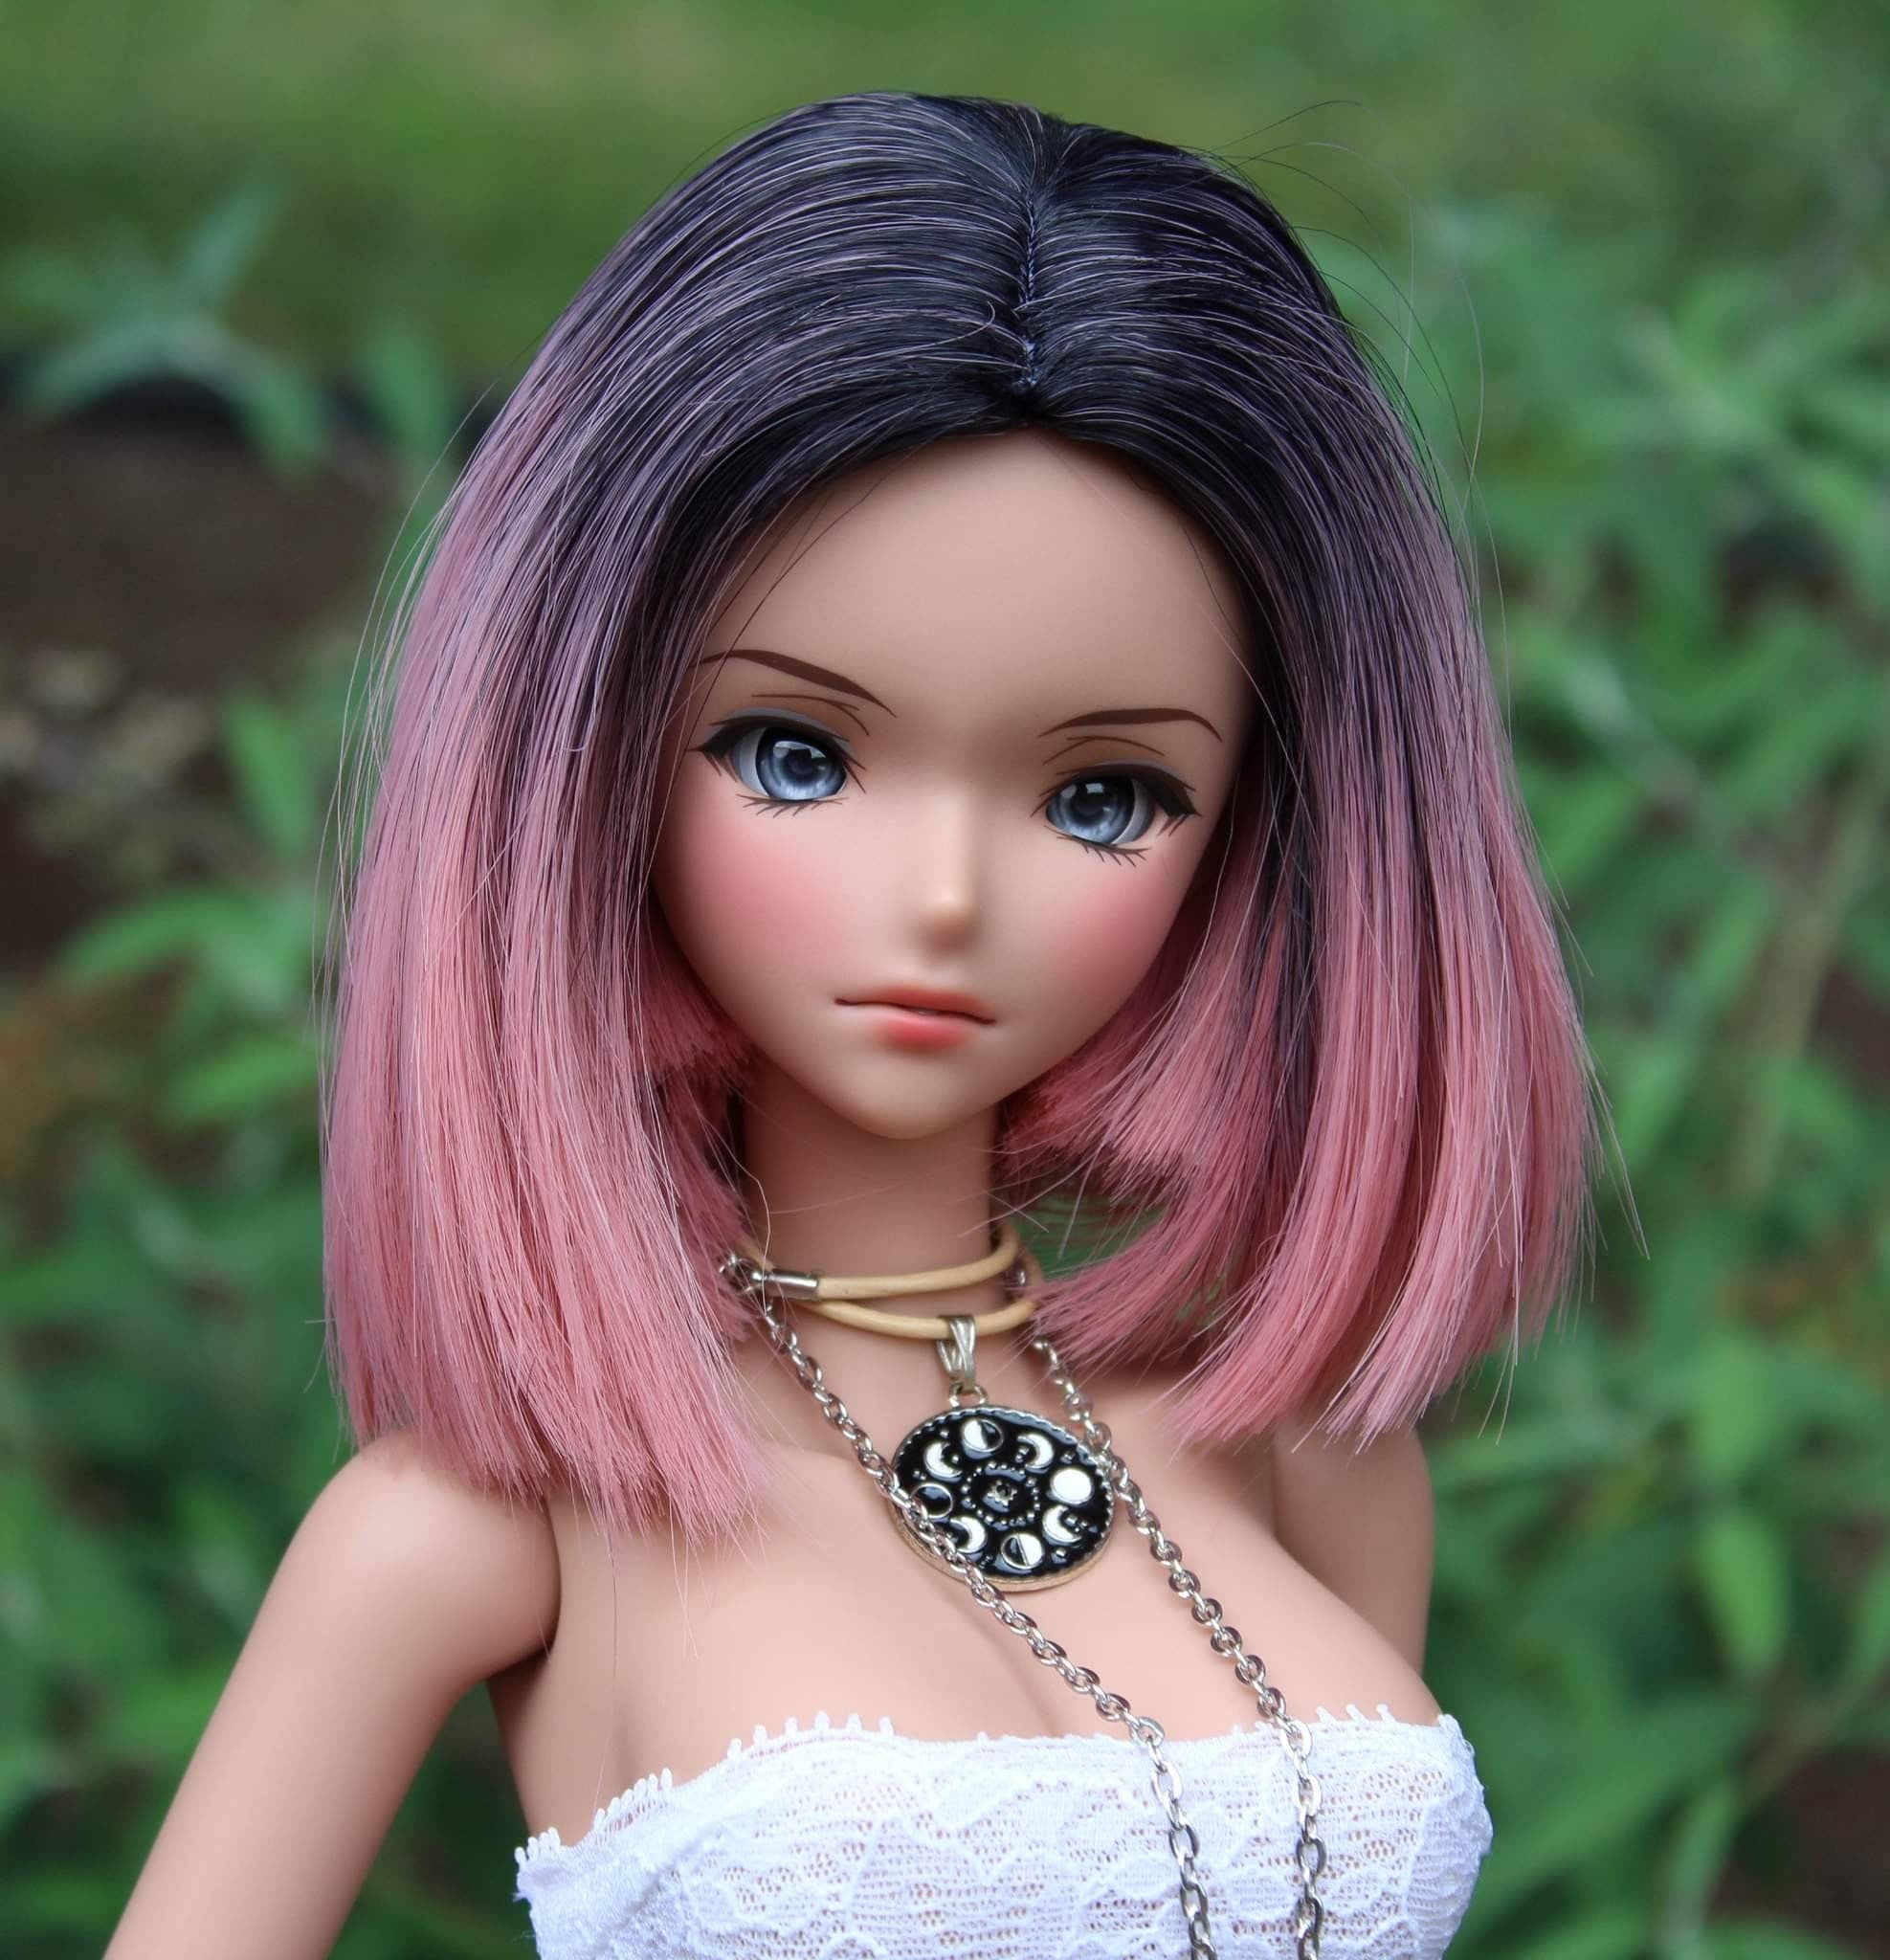 Custom doll Wig for Smart Dolls- "TAN CAPS" 8.5" head size of Bjd, SD, Dollfie Dream dolls  pink ombre